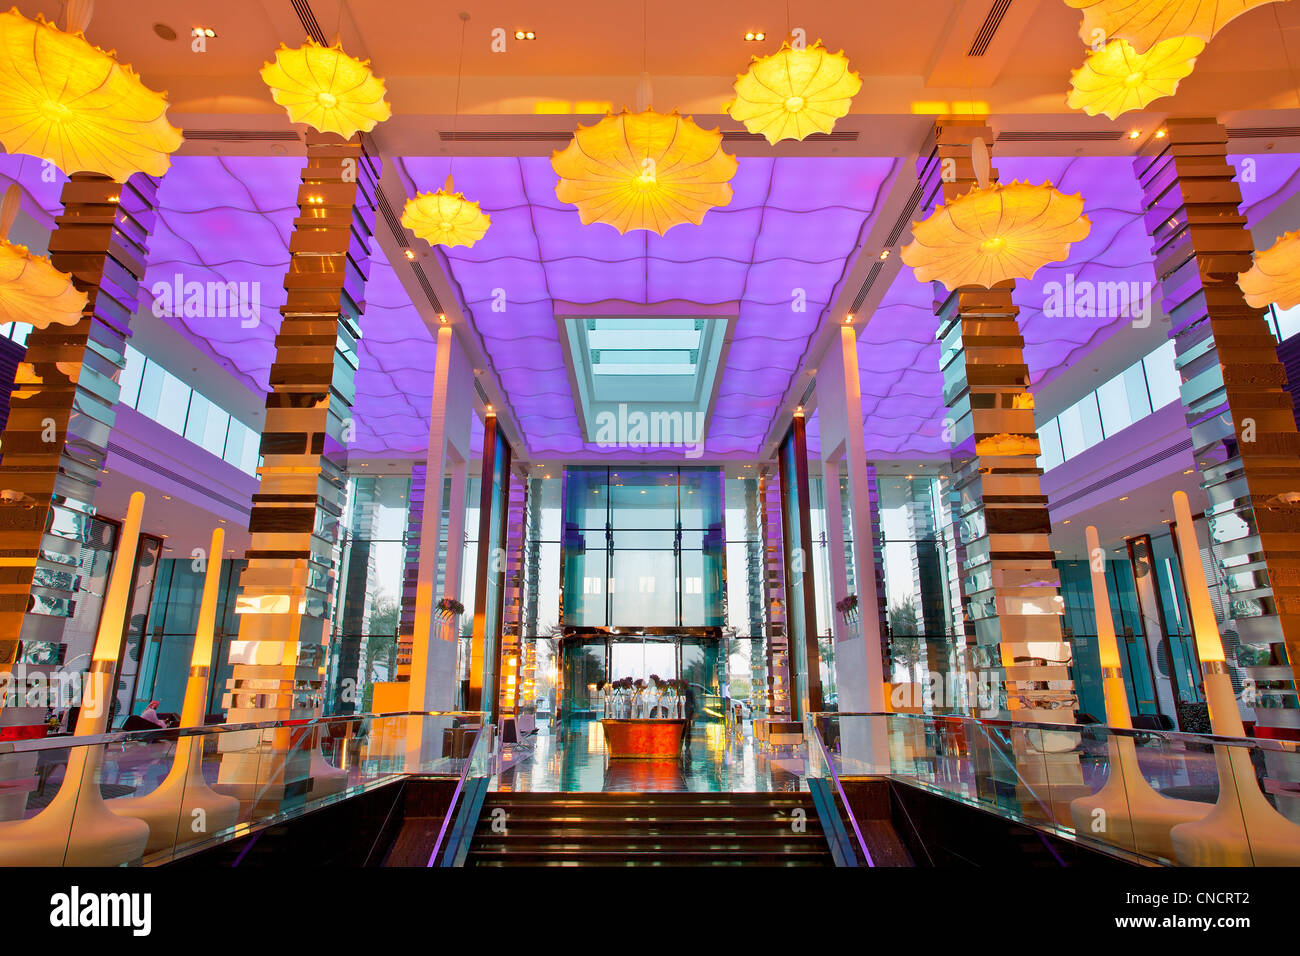 Abu Dhabi , Fairmont Hotel Stock Photo